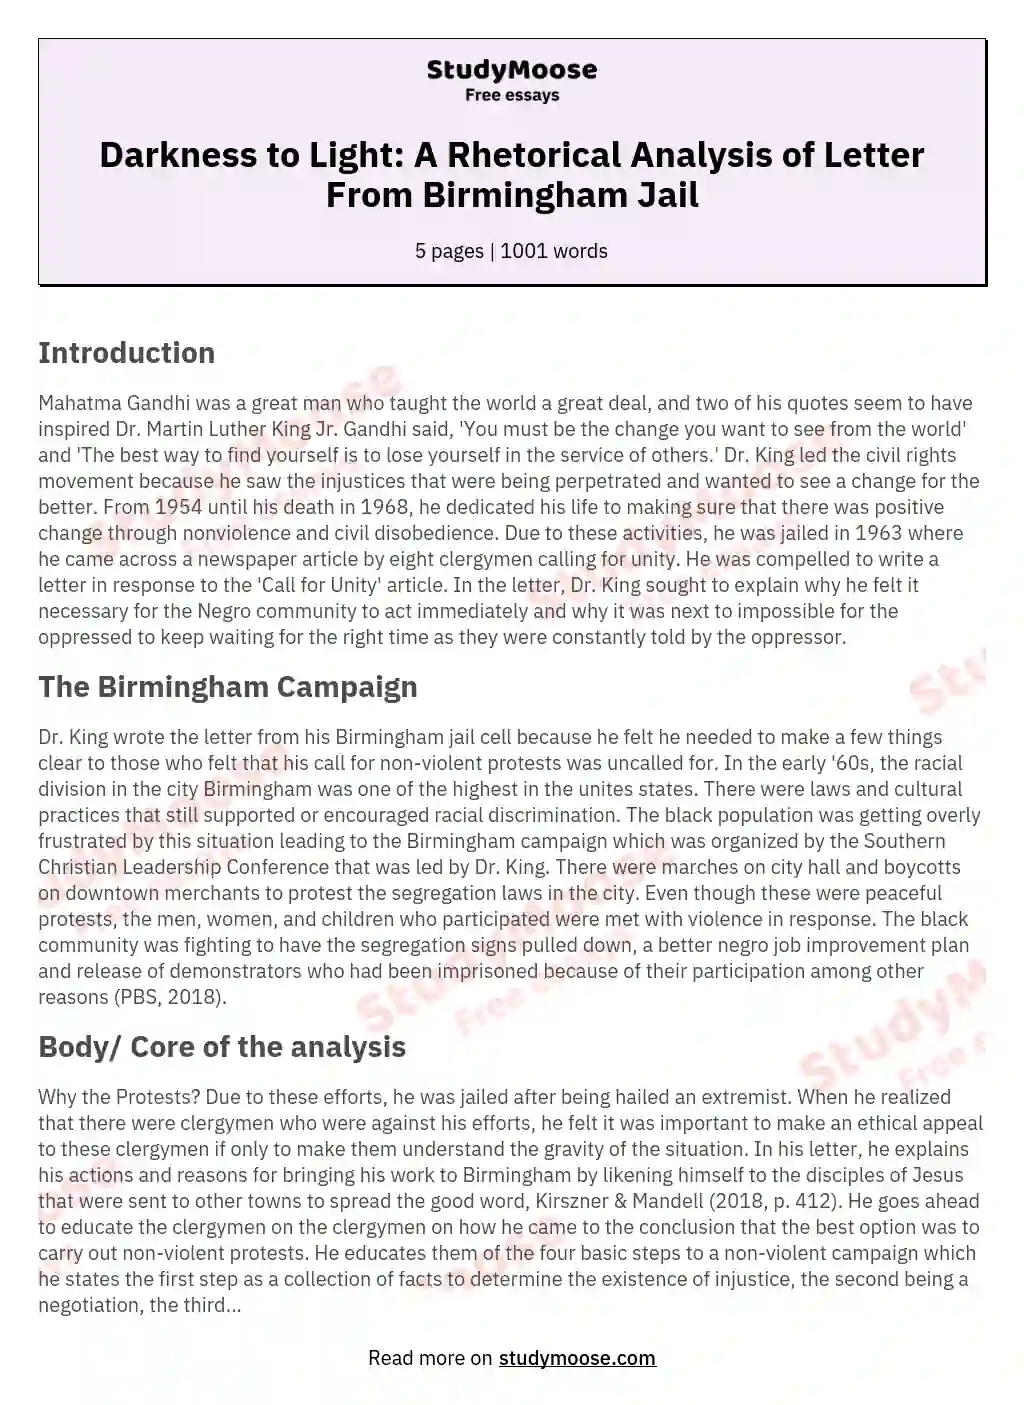 letter from a birmingham jail rhetorical analysis essay